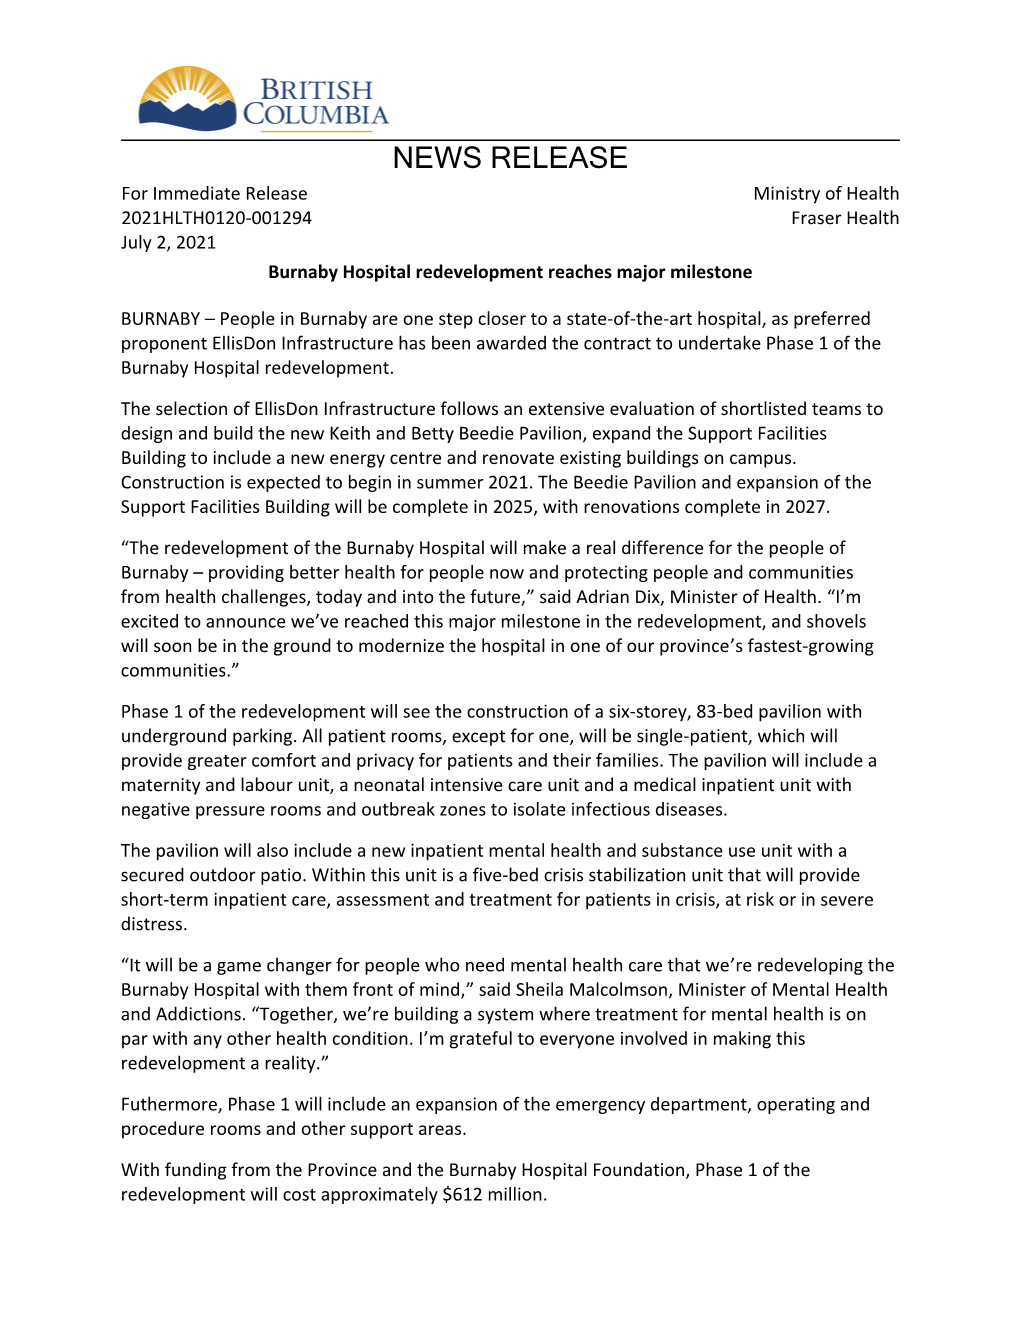 NEWS RELEASE for Immediate Release Ministry of Health 2021HLTH0120-001294 Fraser Health July 2, 2021 Burnaby Hospital Redevelopment Reaches Major Milestone